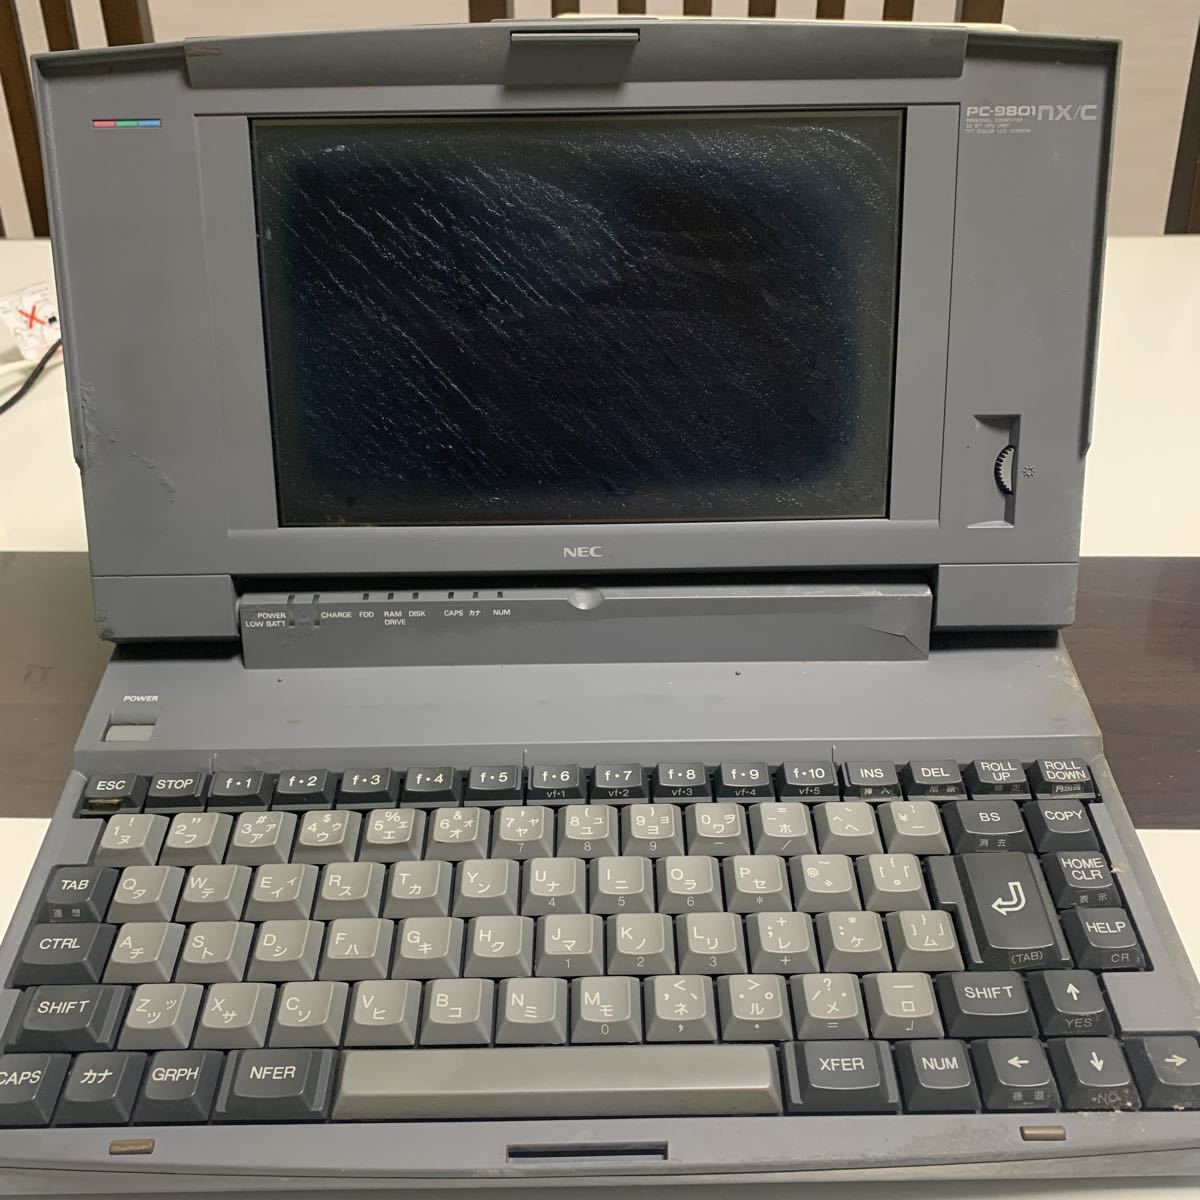 NEC PC-9801 NX/C　　ジャンク_画像5